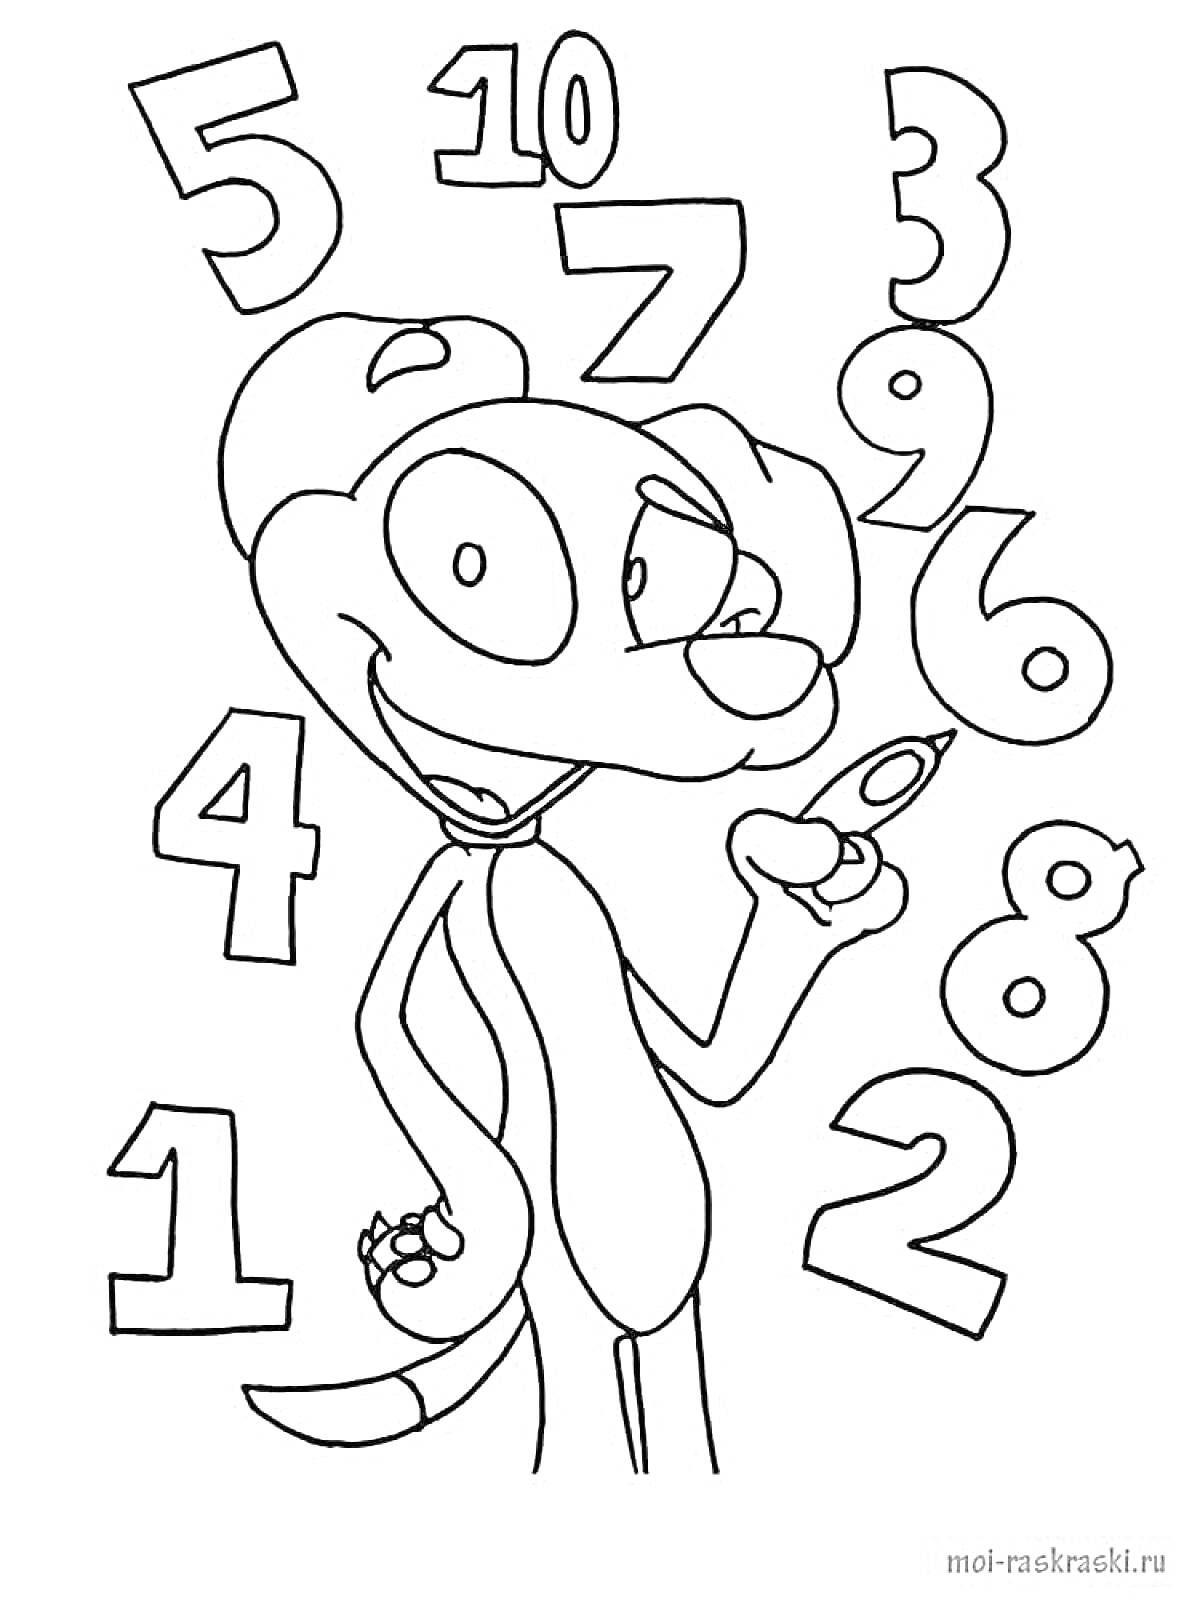 На раскраске изображено: Цифры, Учим цифры, Животное, 10, Цифра 8, Цифра 2, Цифра 5, Цифра 7, Цифра 6, Цифра 1, Цифра 3, Цифра 9, Цифра 4